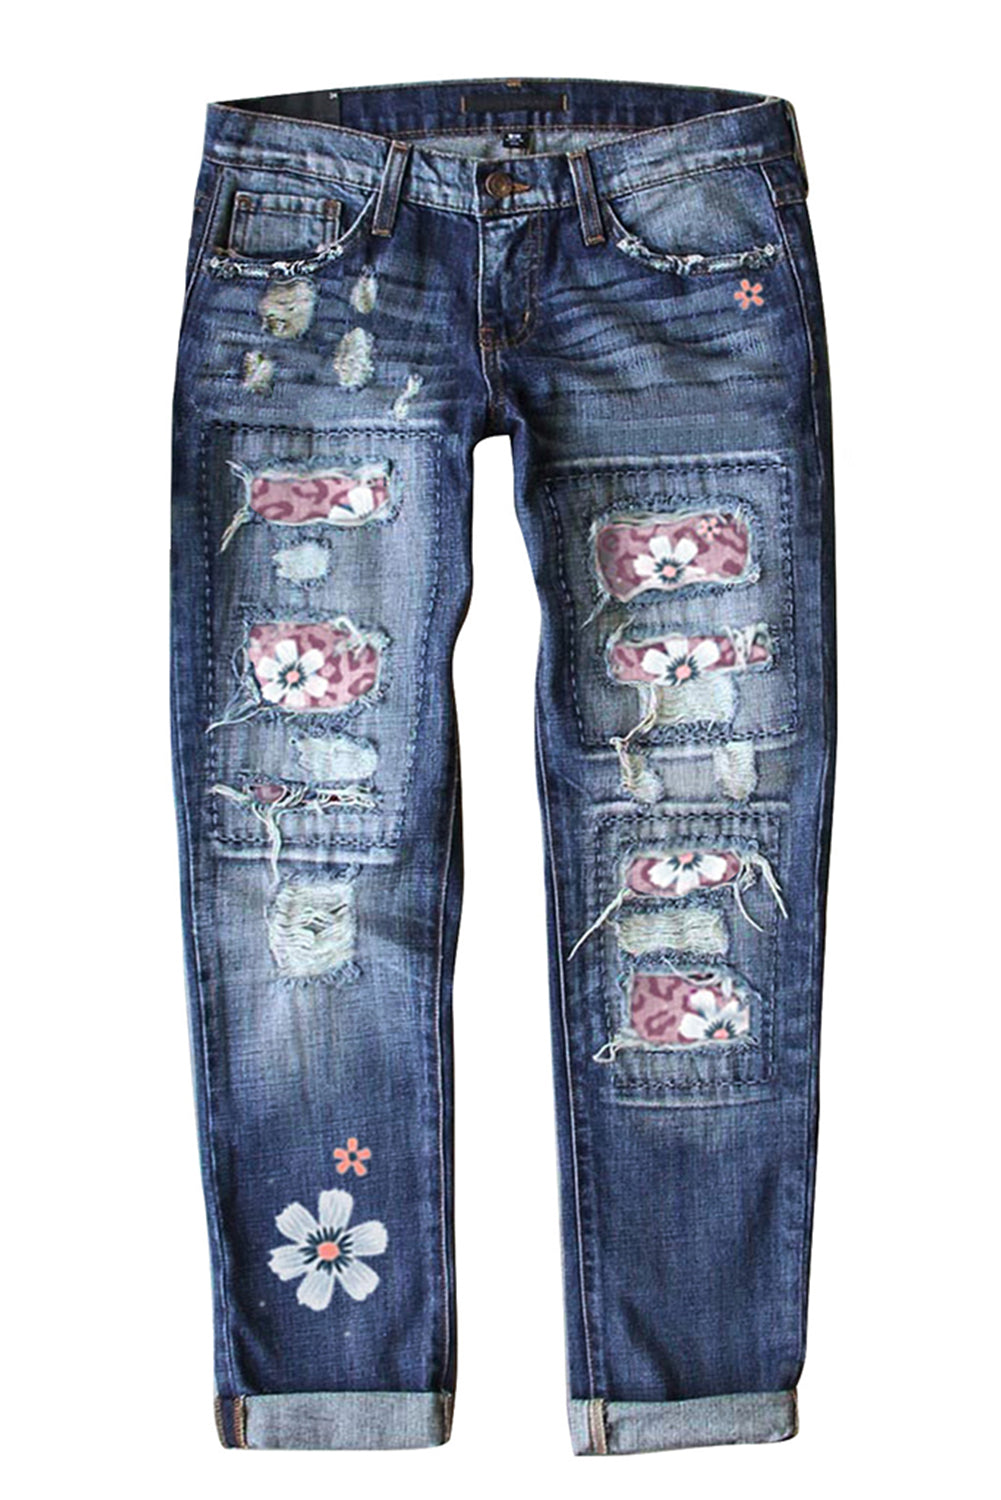 Pink Floral Leopard Ripped Boyfriend Distressed Denim Pants Jeans LC782289-10